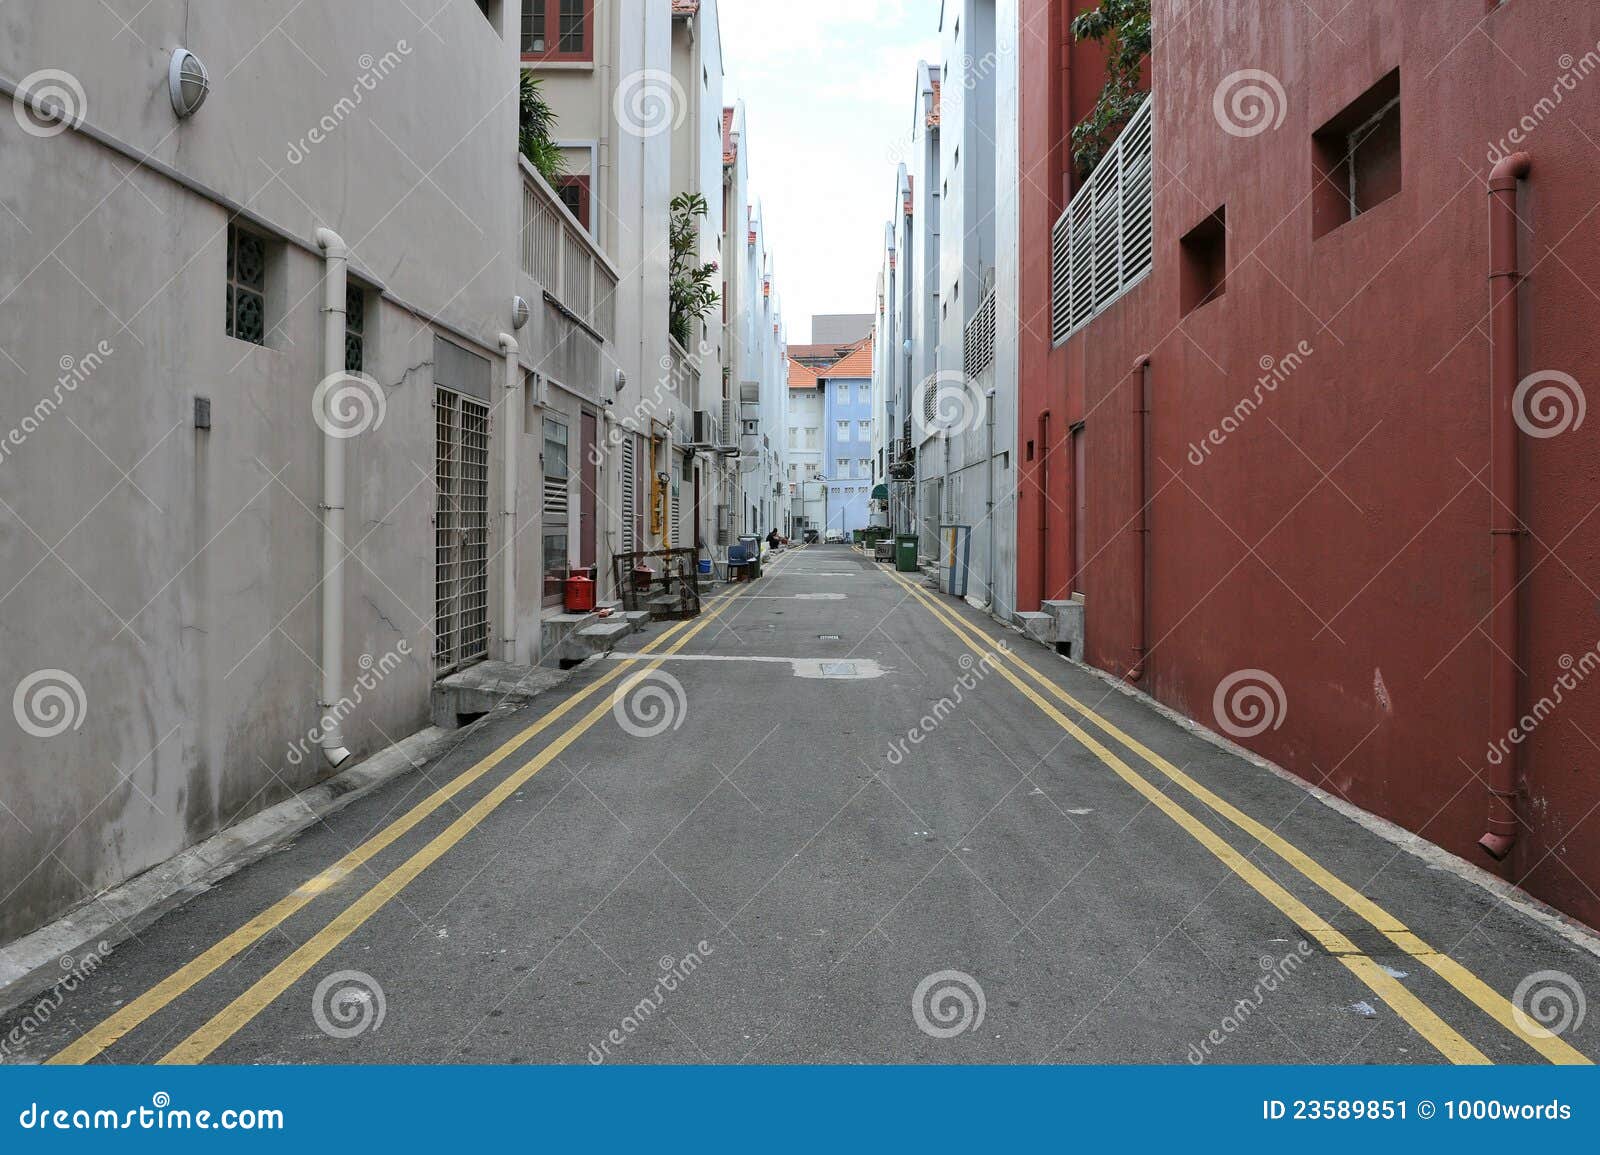 empty inner city street